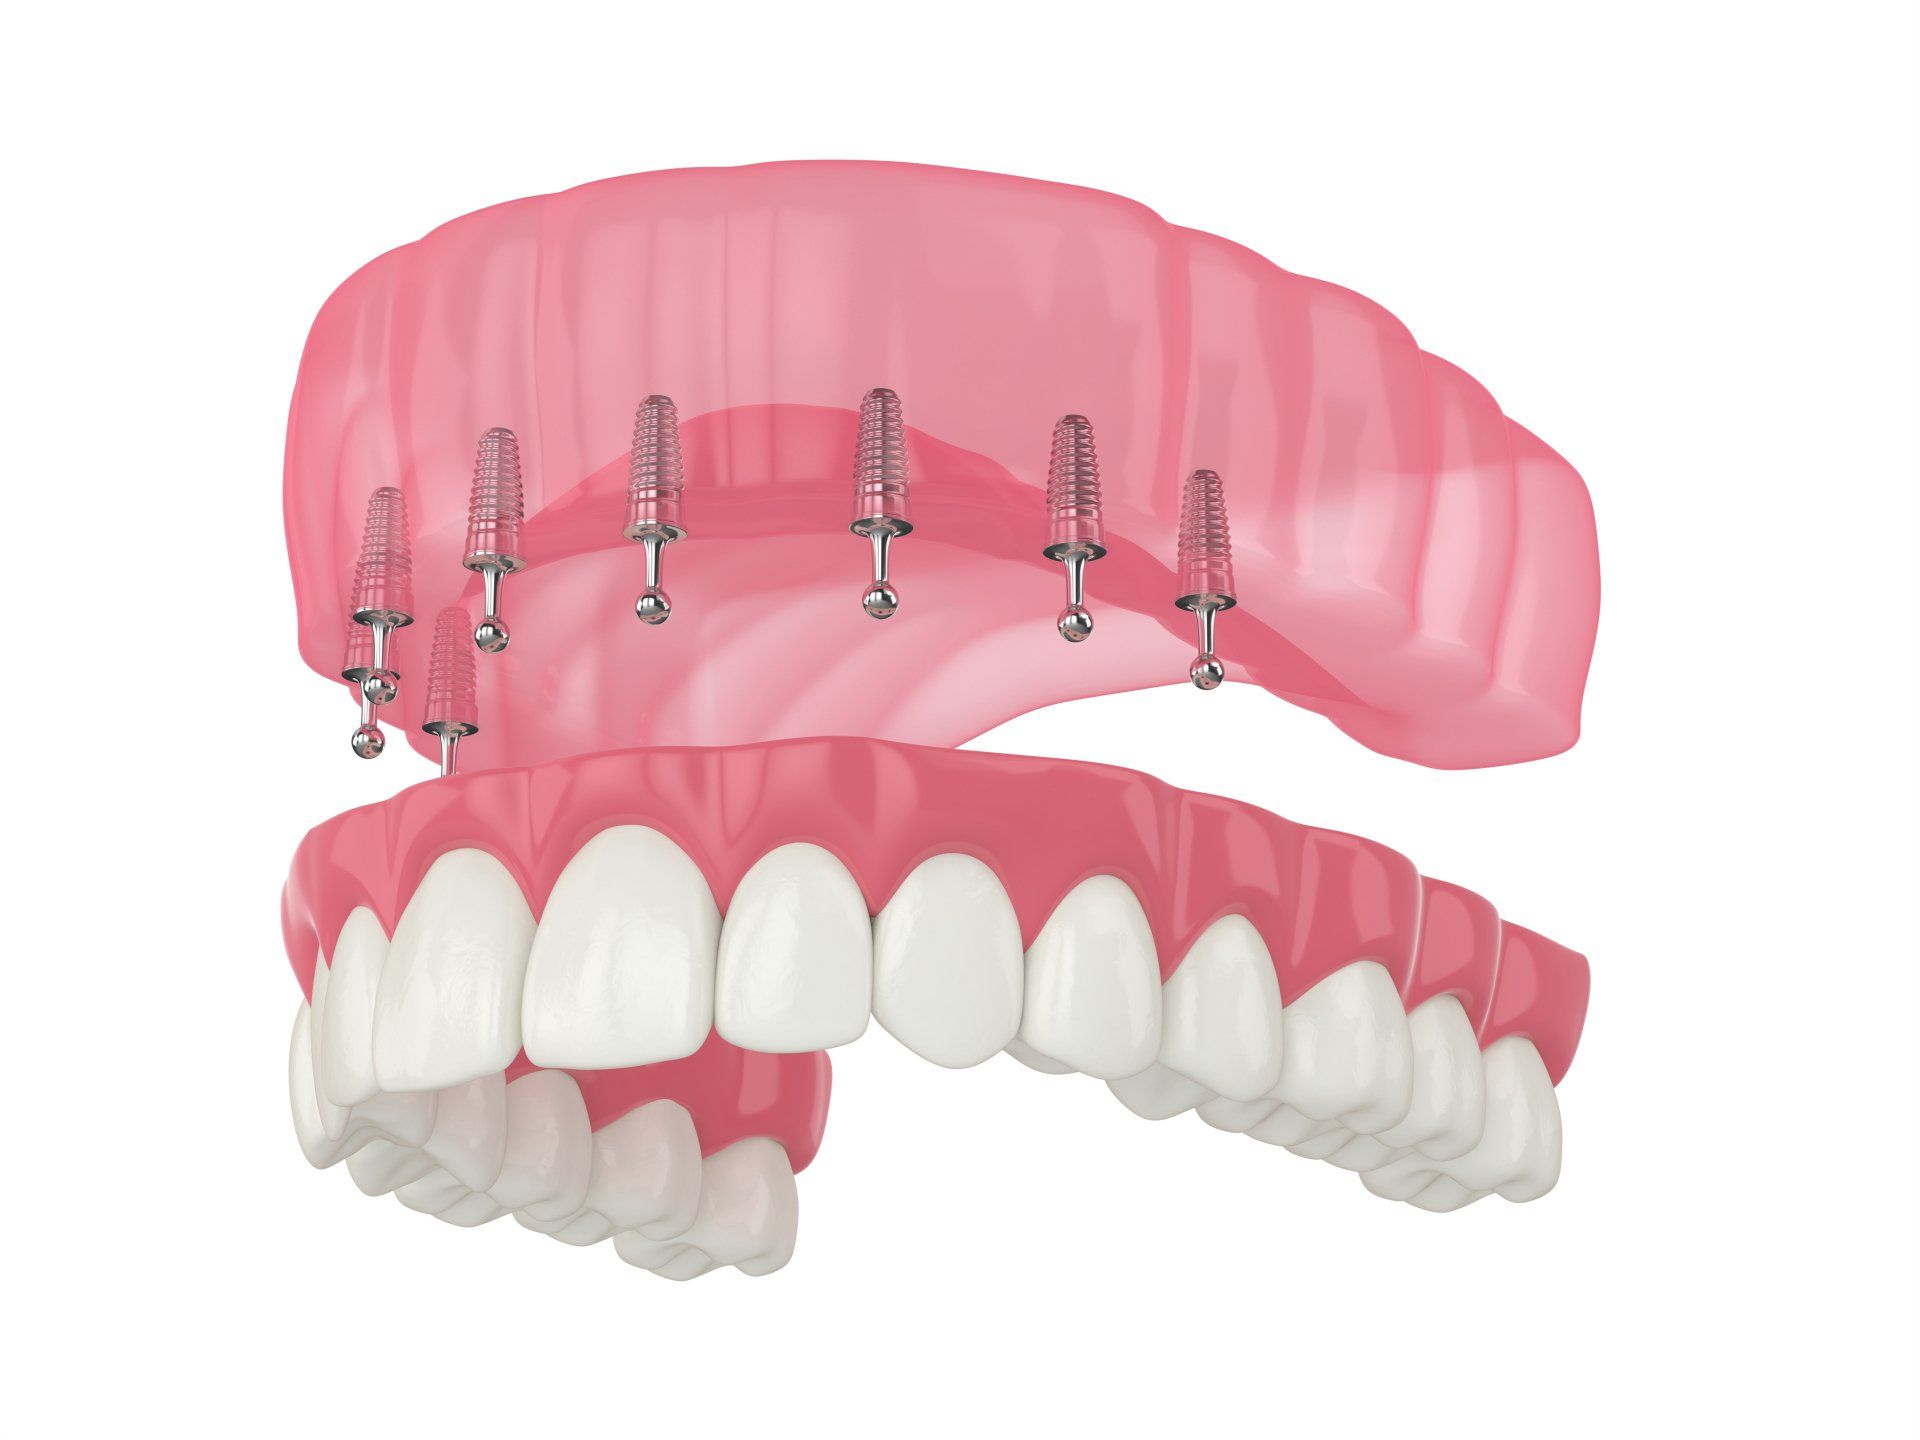 model of permanent dentures on 8 implants